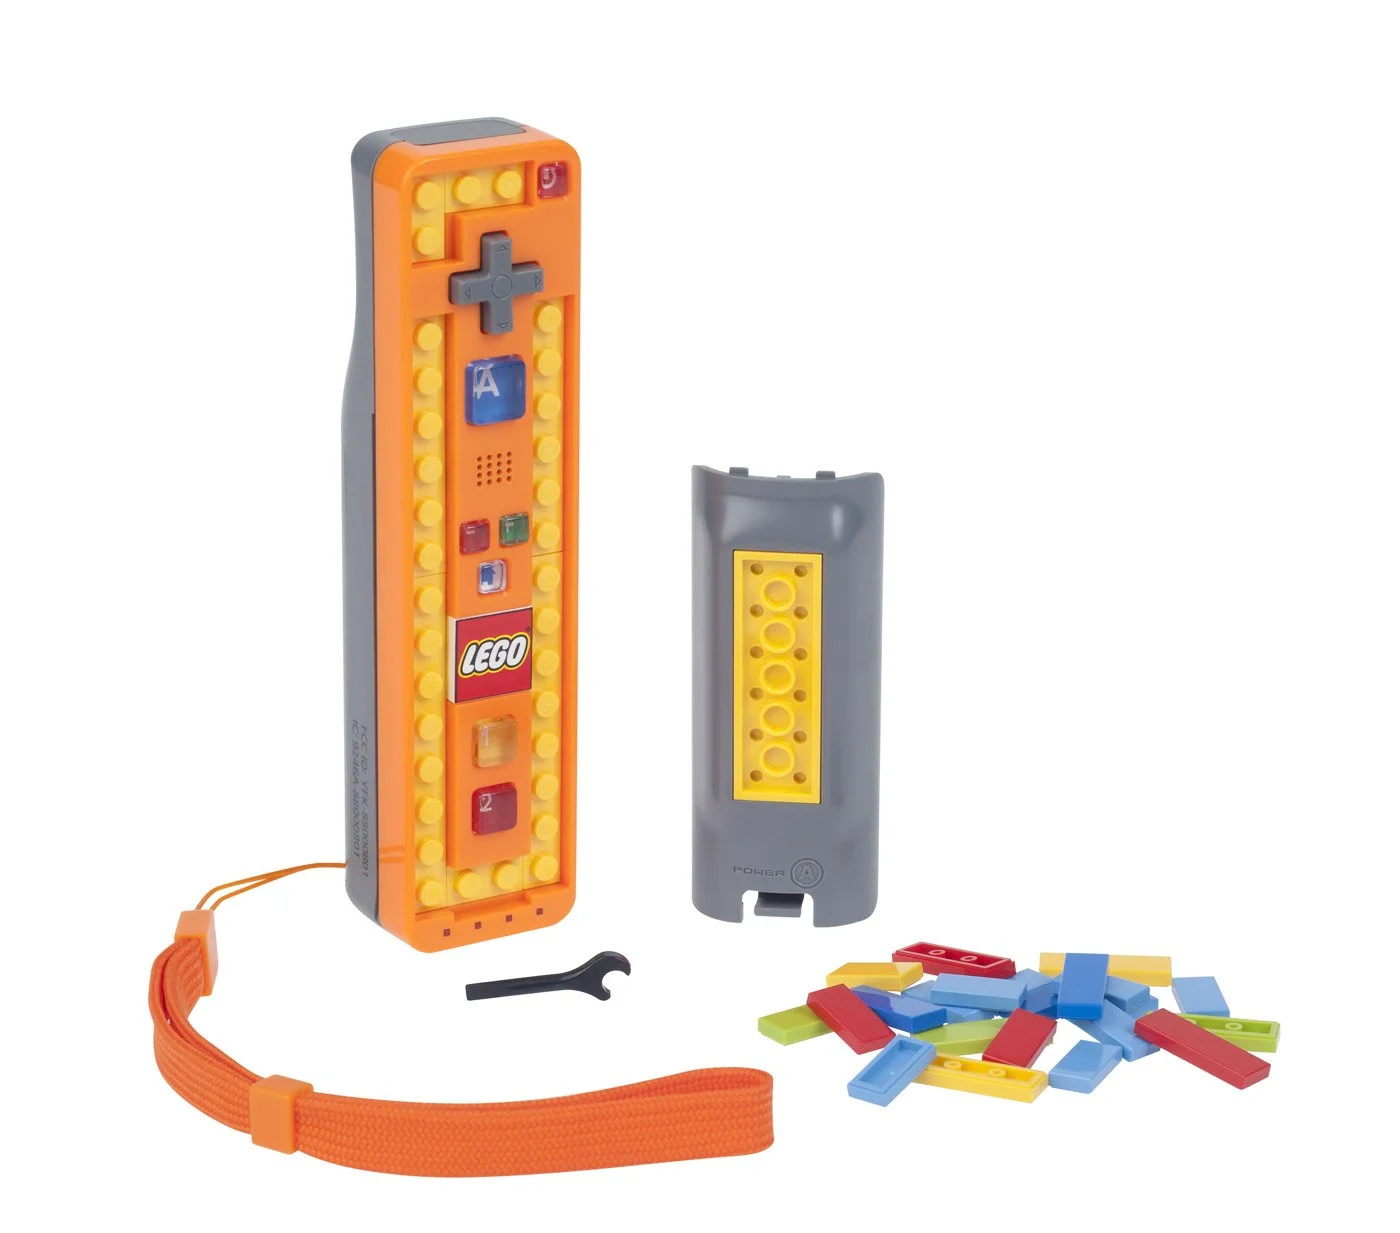  Lego Play &amp; Build Wii Remote Controller (Orange)